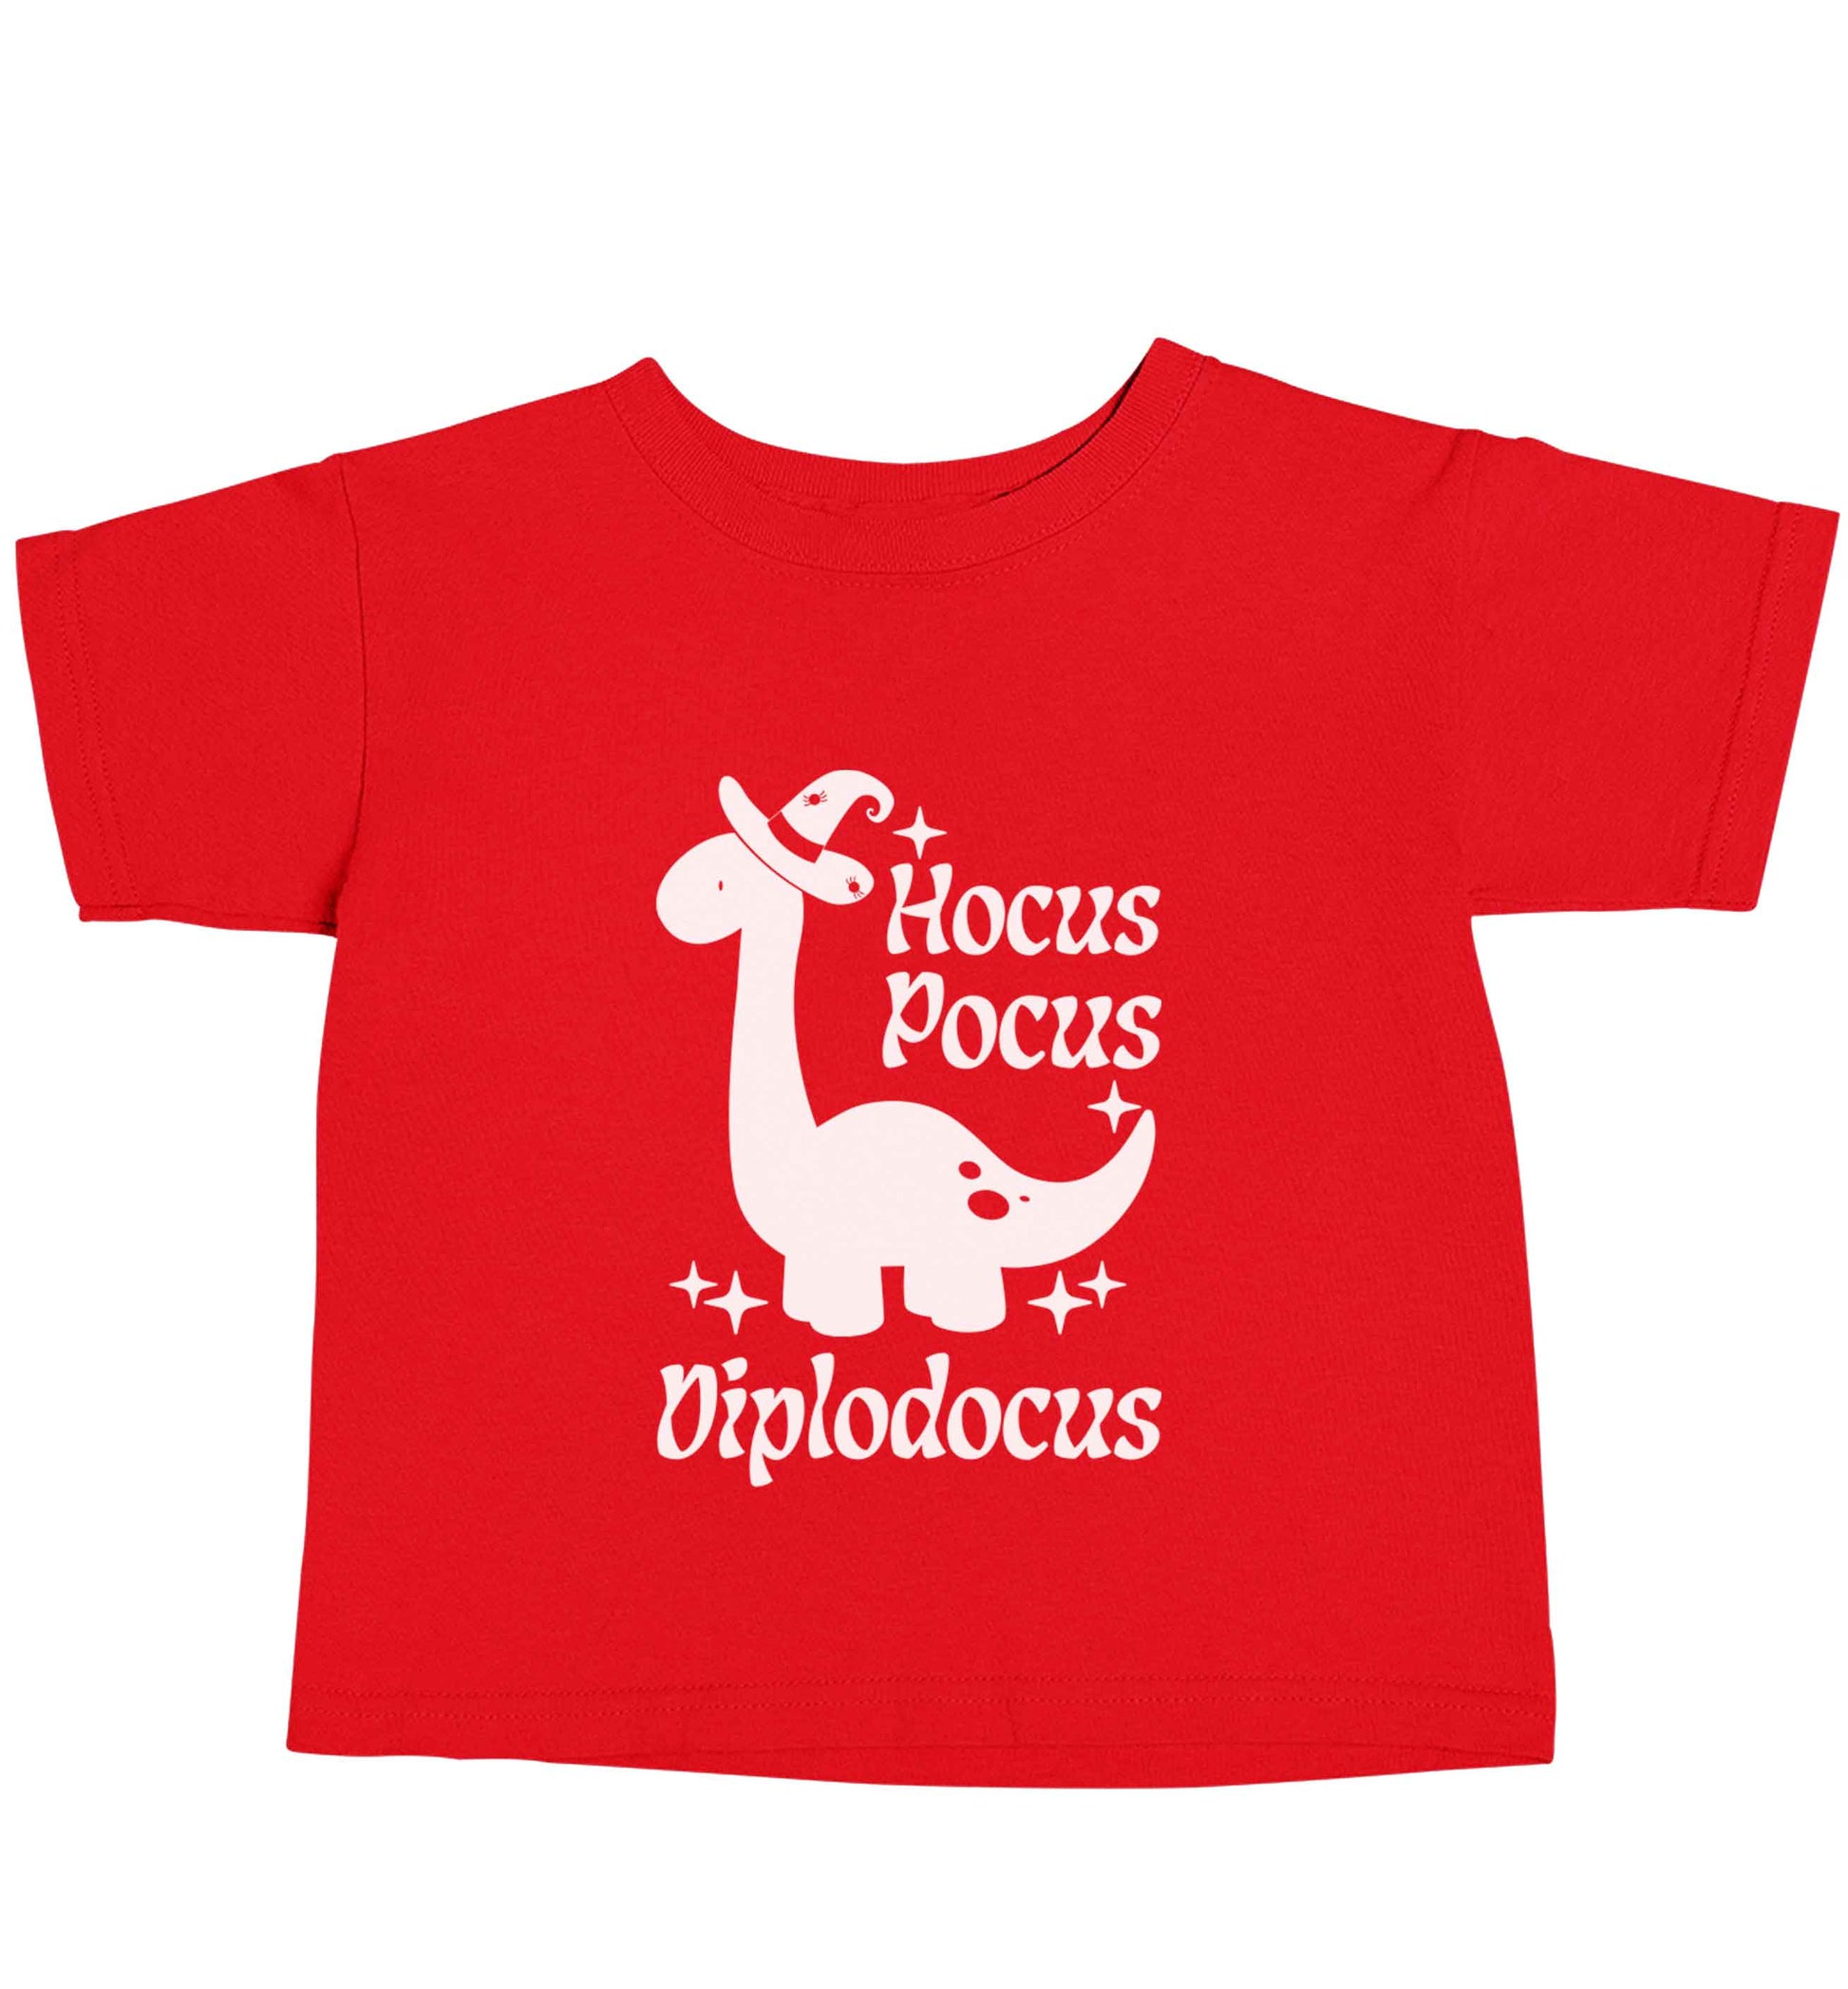 Hocus pocus diplodocus Kit red baby toddler Tshirt 2 Years